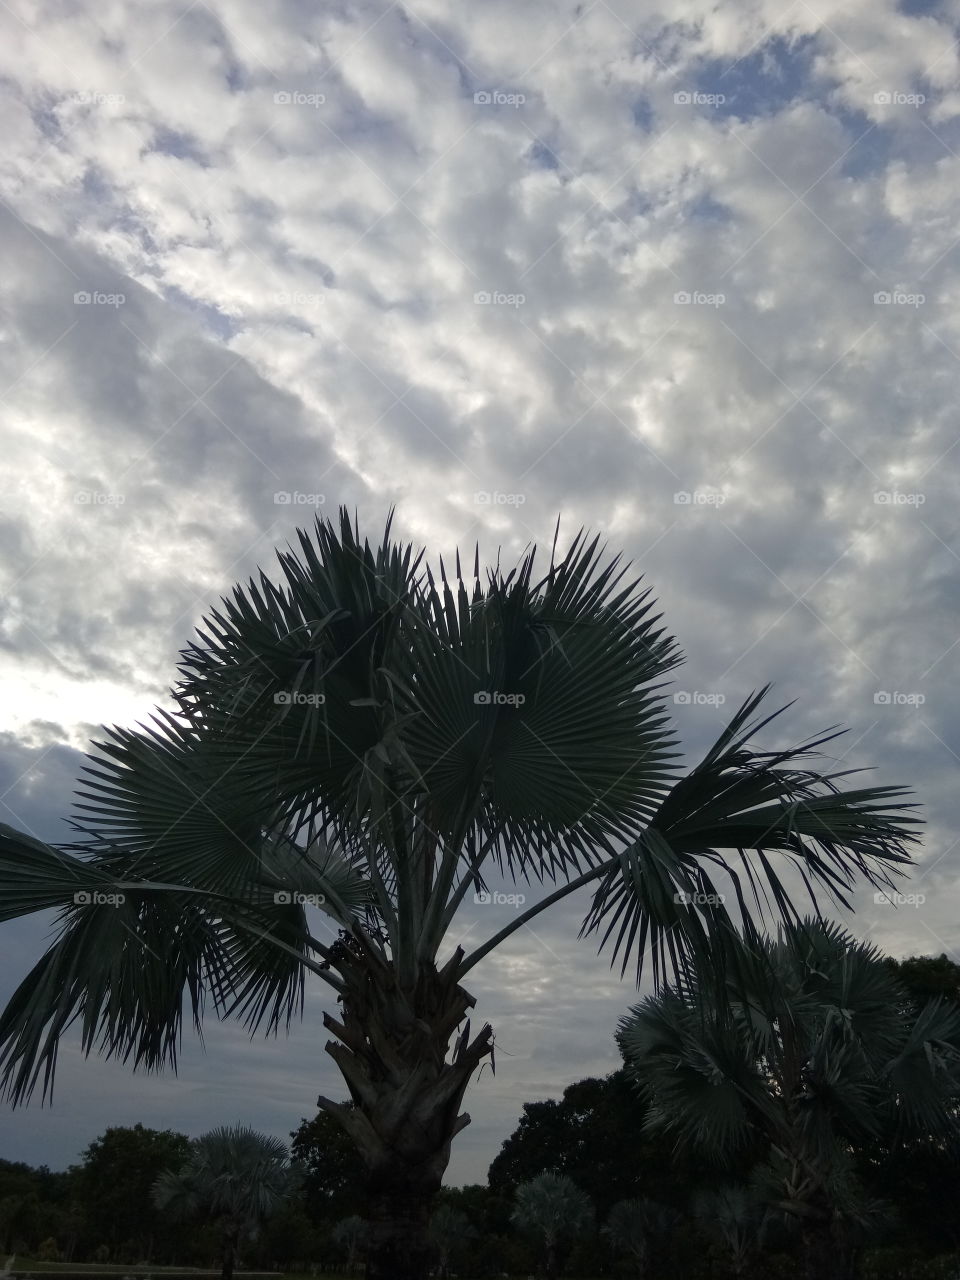 dark
palm
sky
tree
thailand